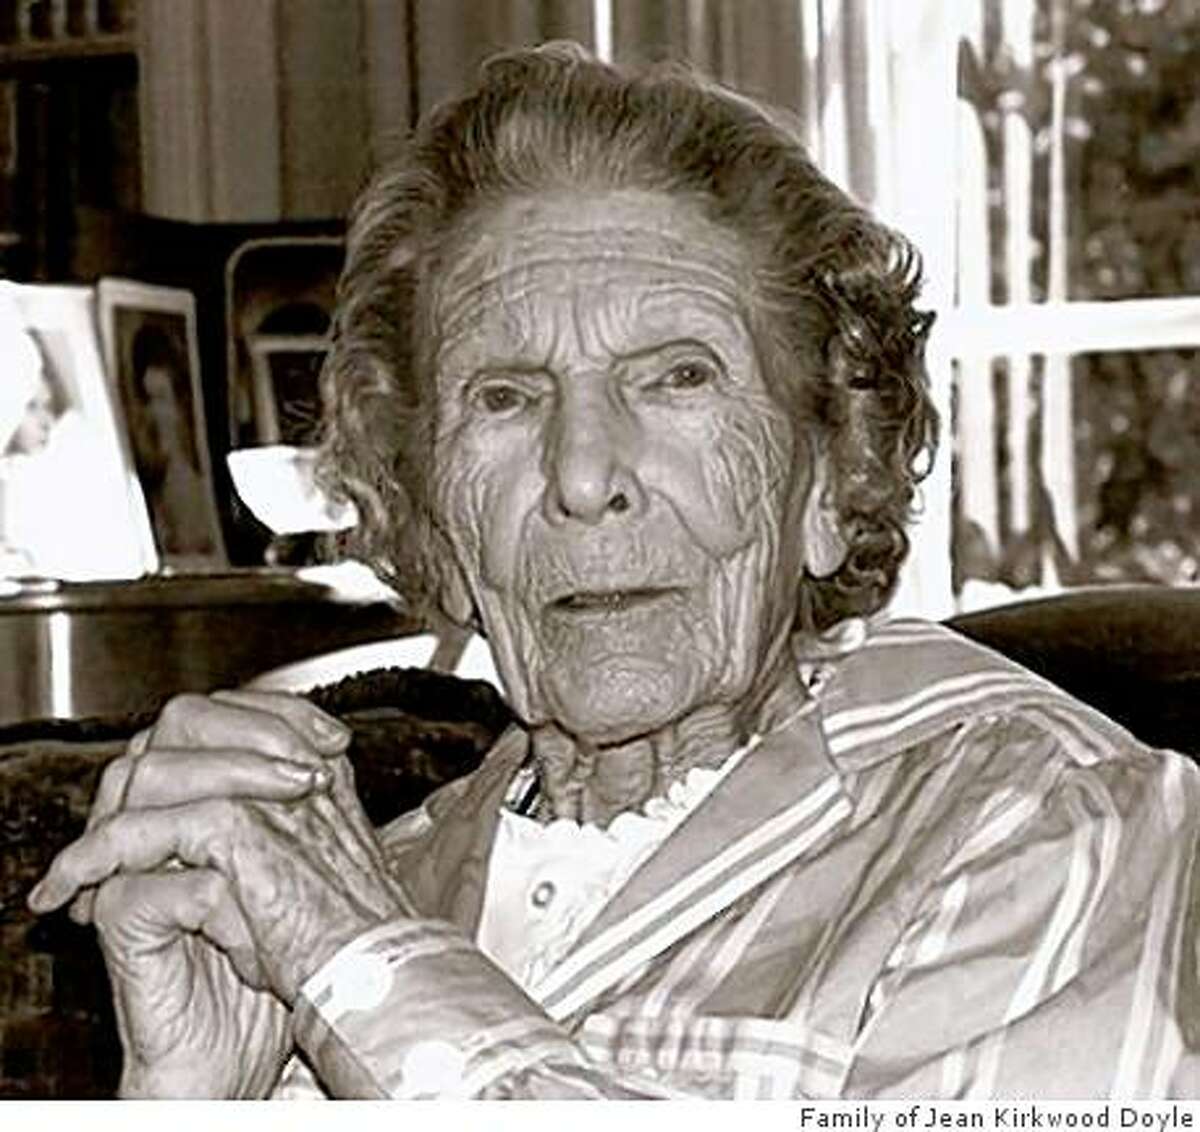 Jean Kirkwood Doyle, SF philanthropist, died at age 98 on February 15, 2009